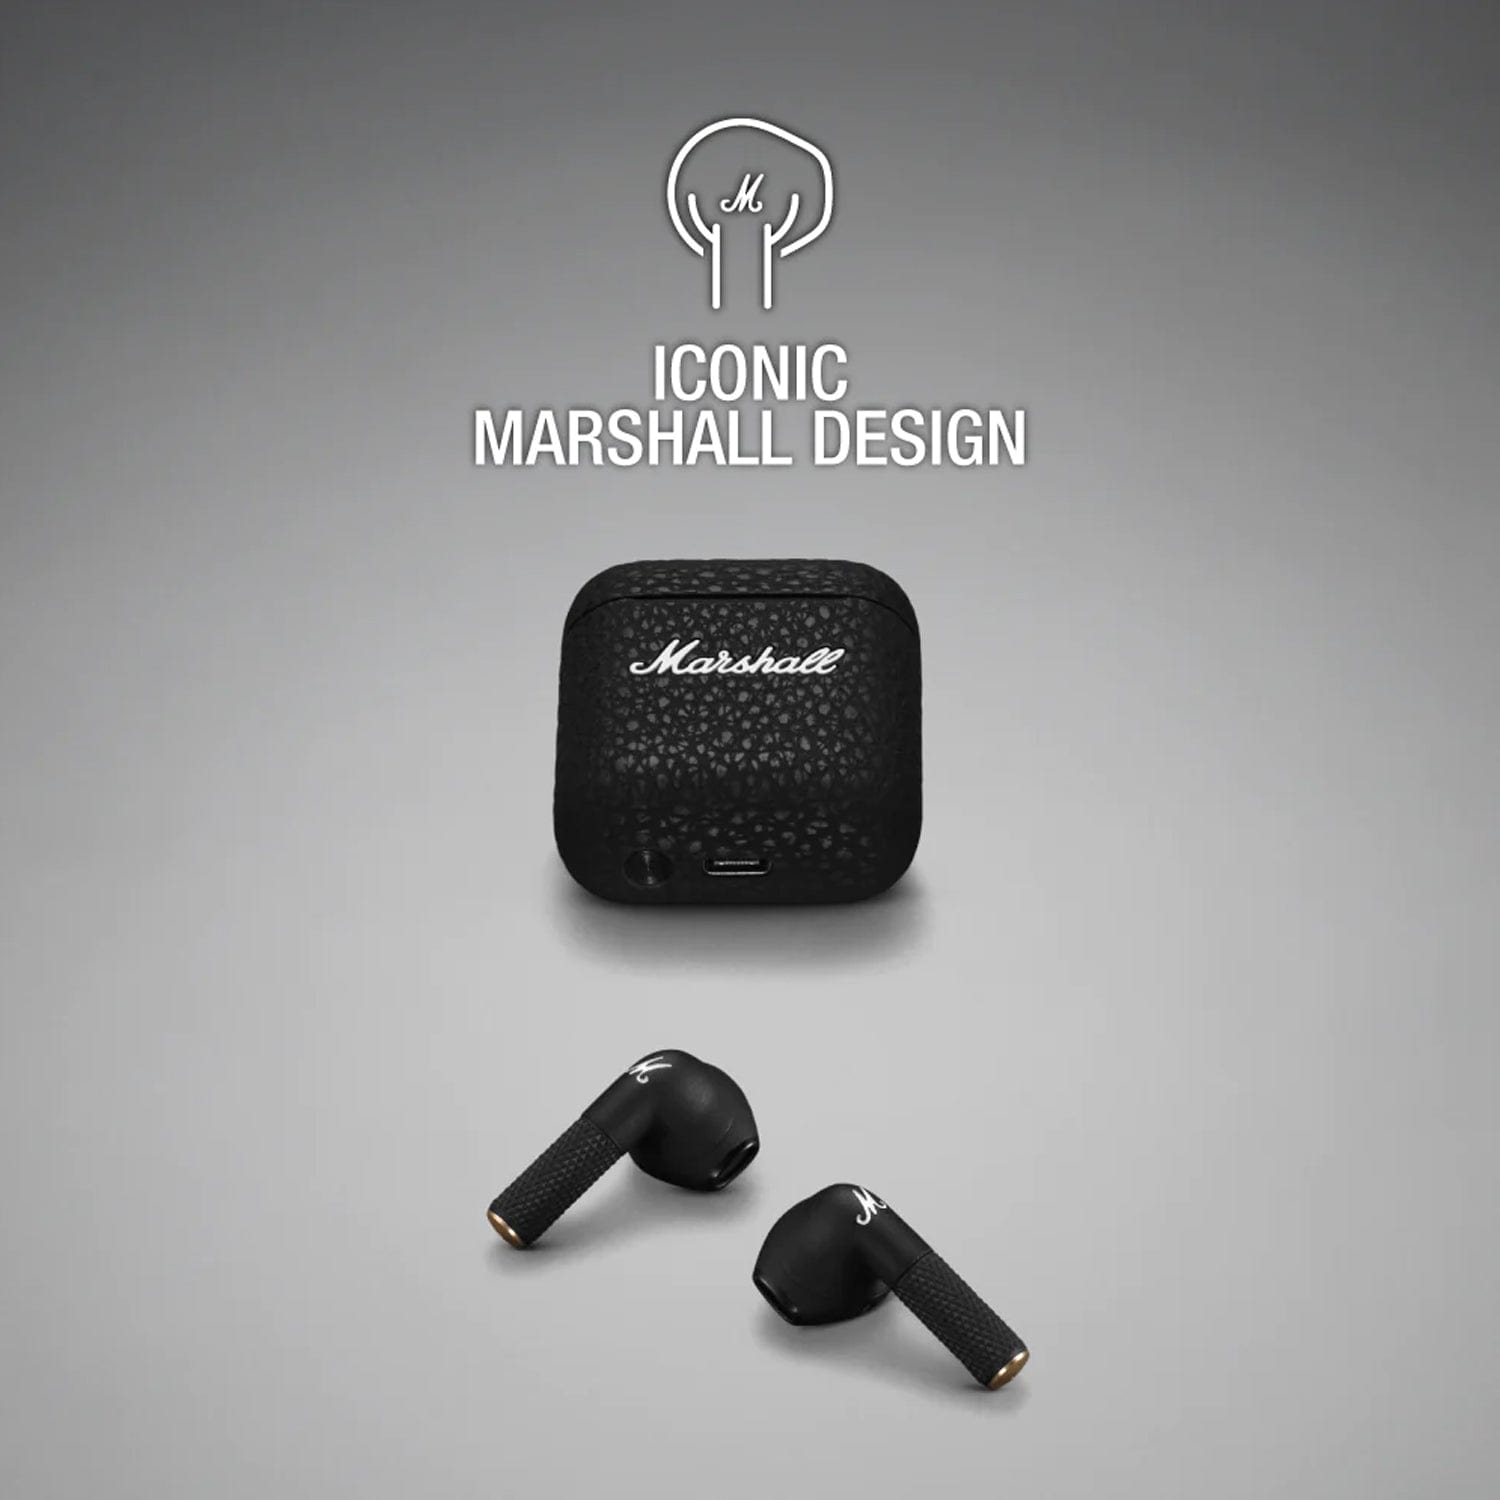 Marshall Minor III True Wireless In-Ear Headphones, Black